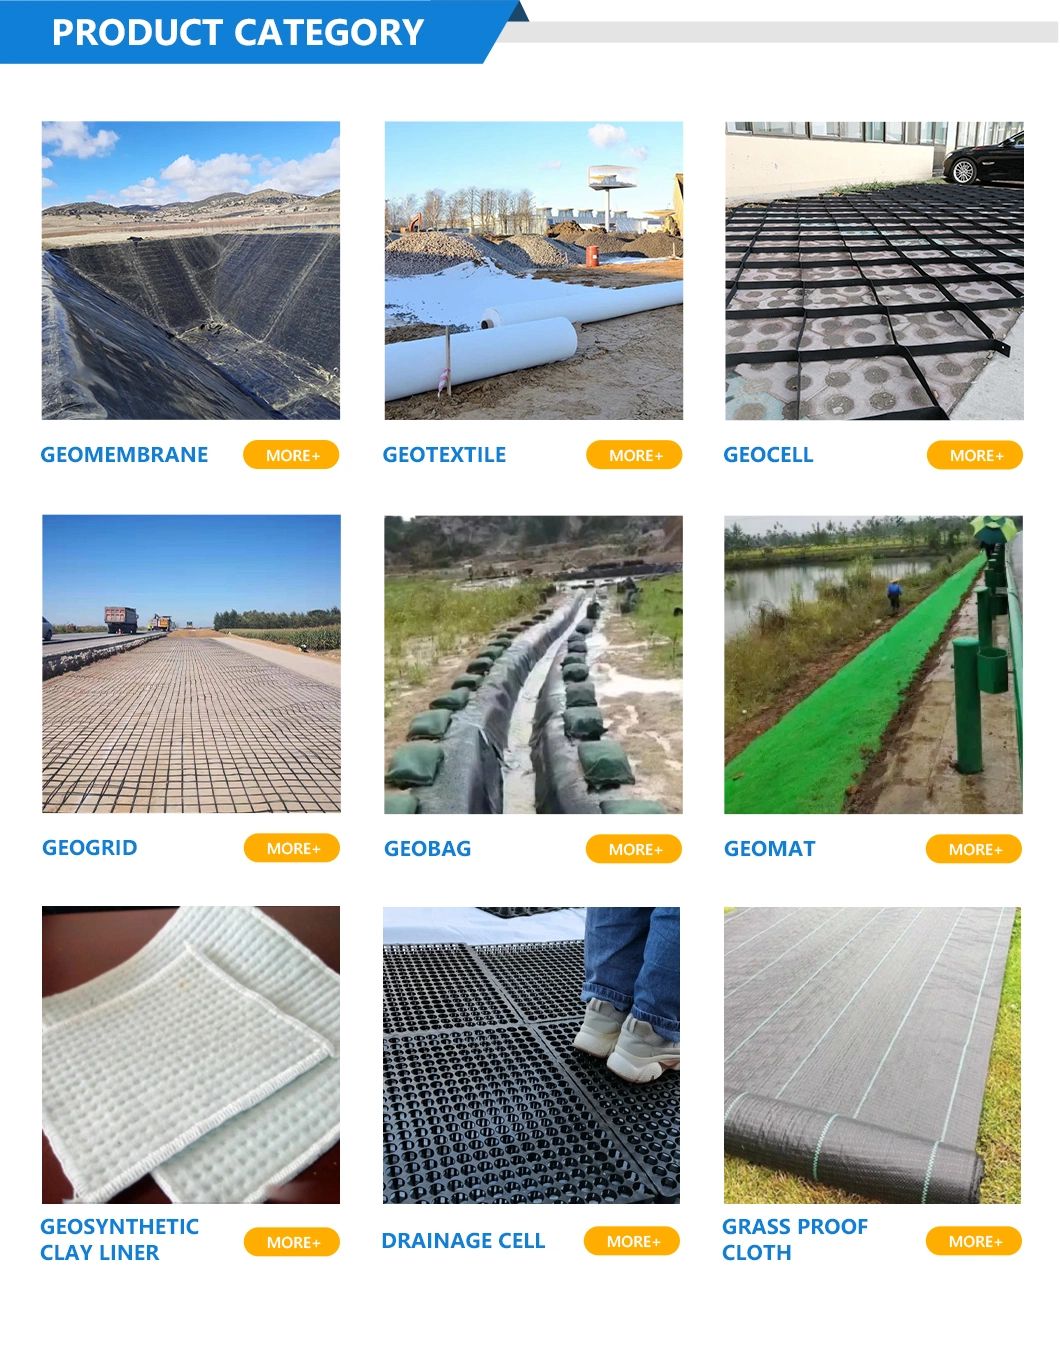 China Gustomized HDPE/LDPE/PVC/EV/PE/Ecb/Composite Geomembrane Manufacturer for Aquaculture/Fish/Shrimp/Pond/Dam/Landfill/Mining/Salt/Tailing Liner/Resevroir